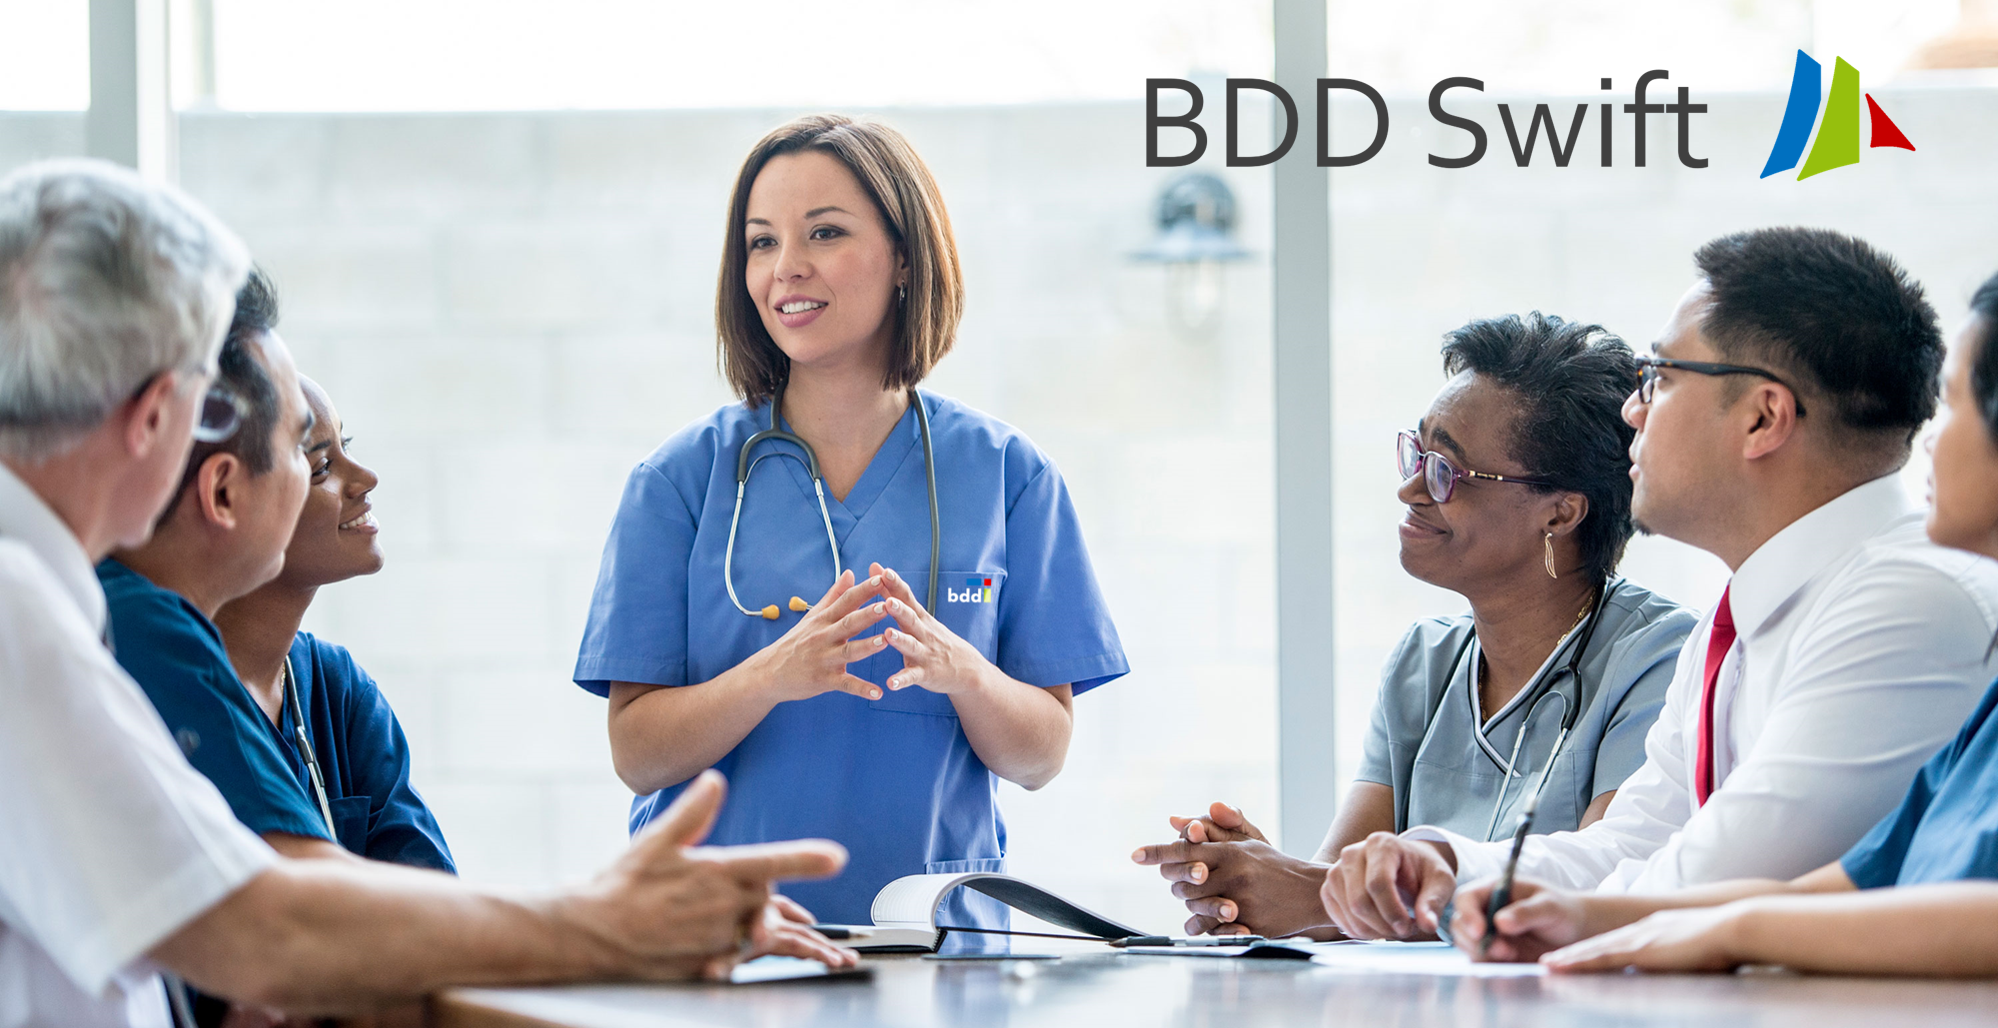 BDD Swift - adaptive clinical studies